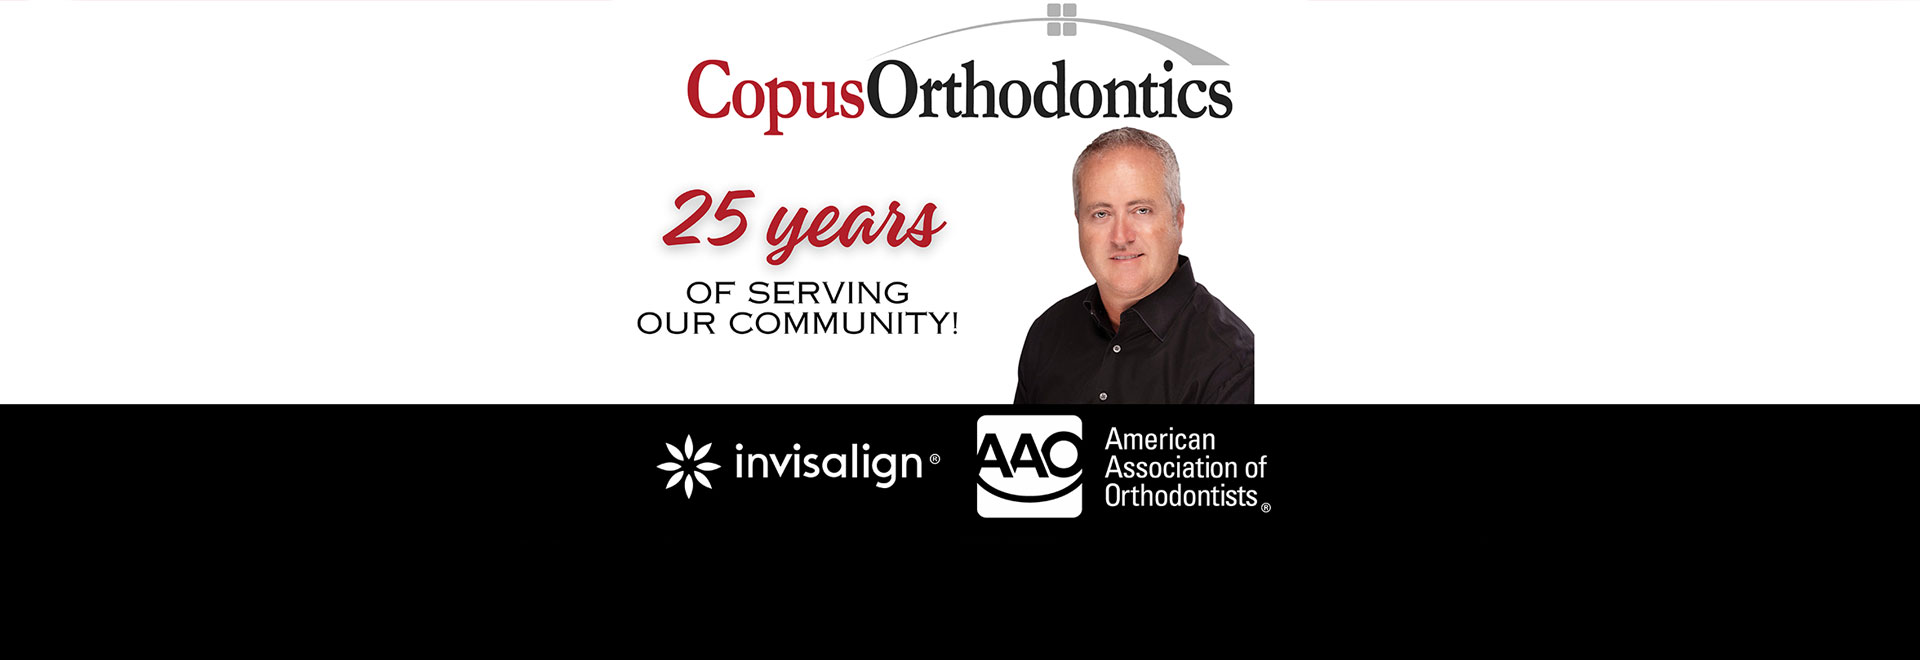 Copus Orthodontics 25th Anniversary